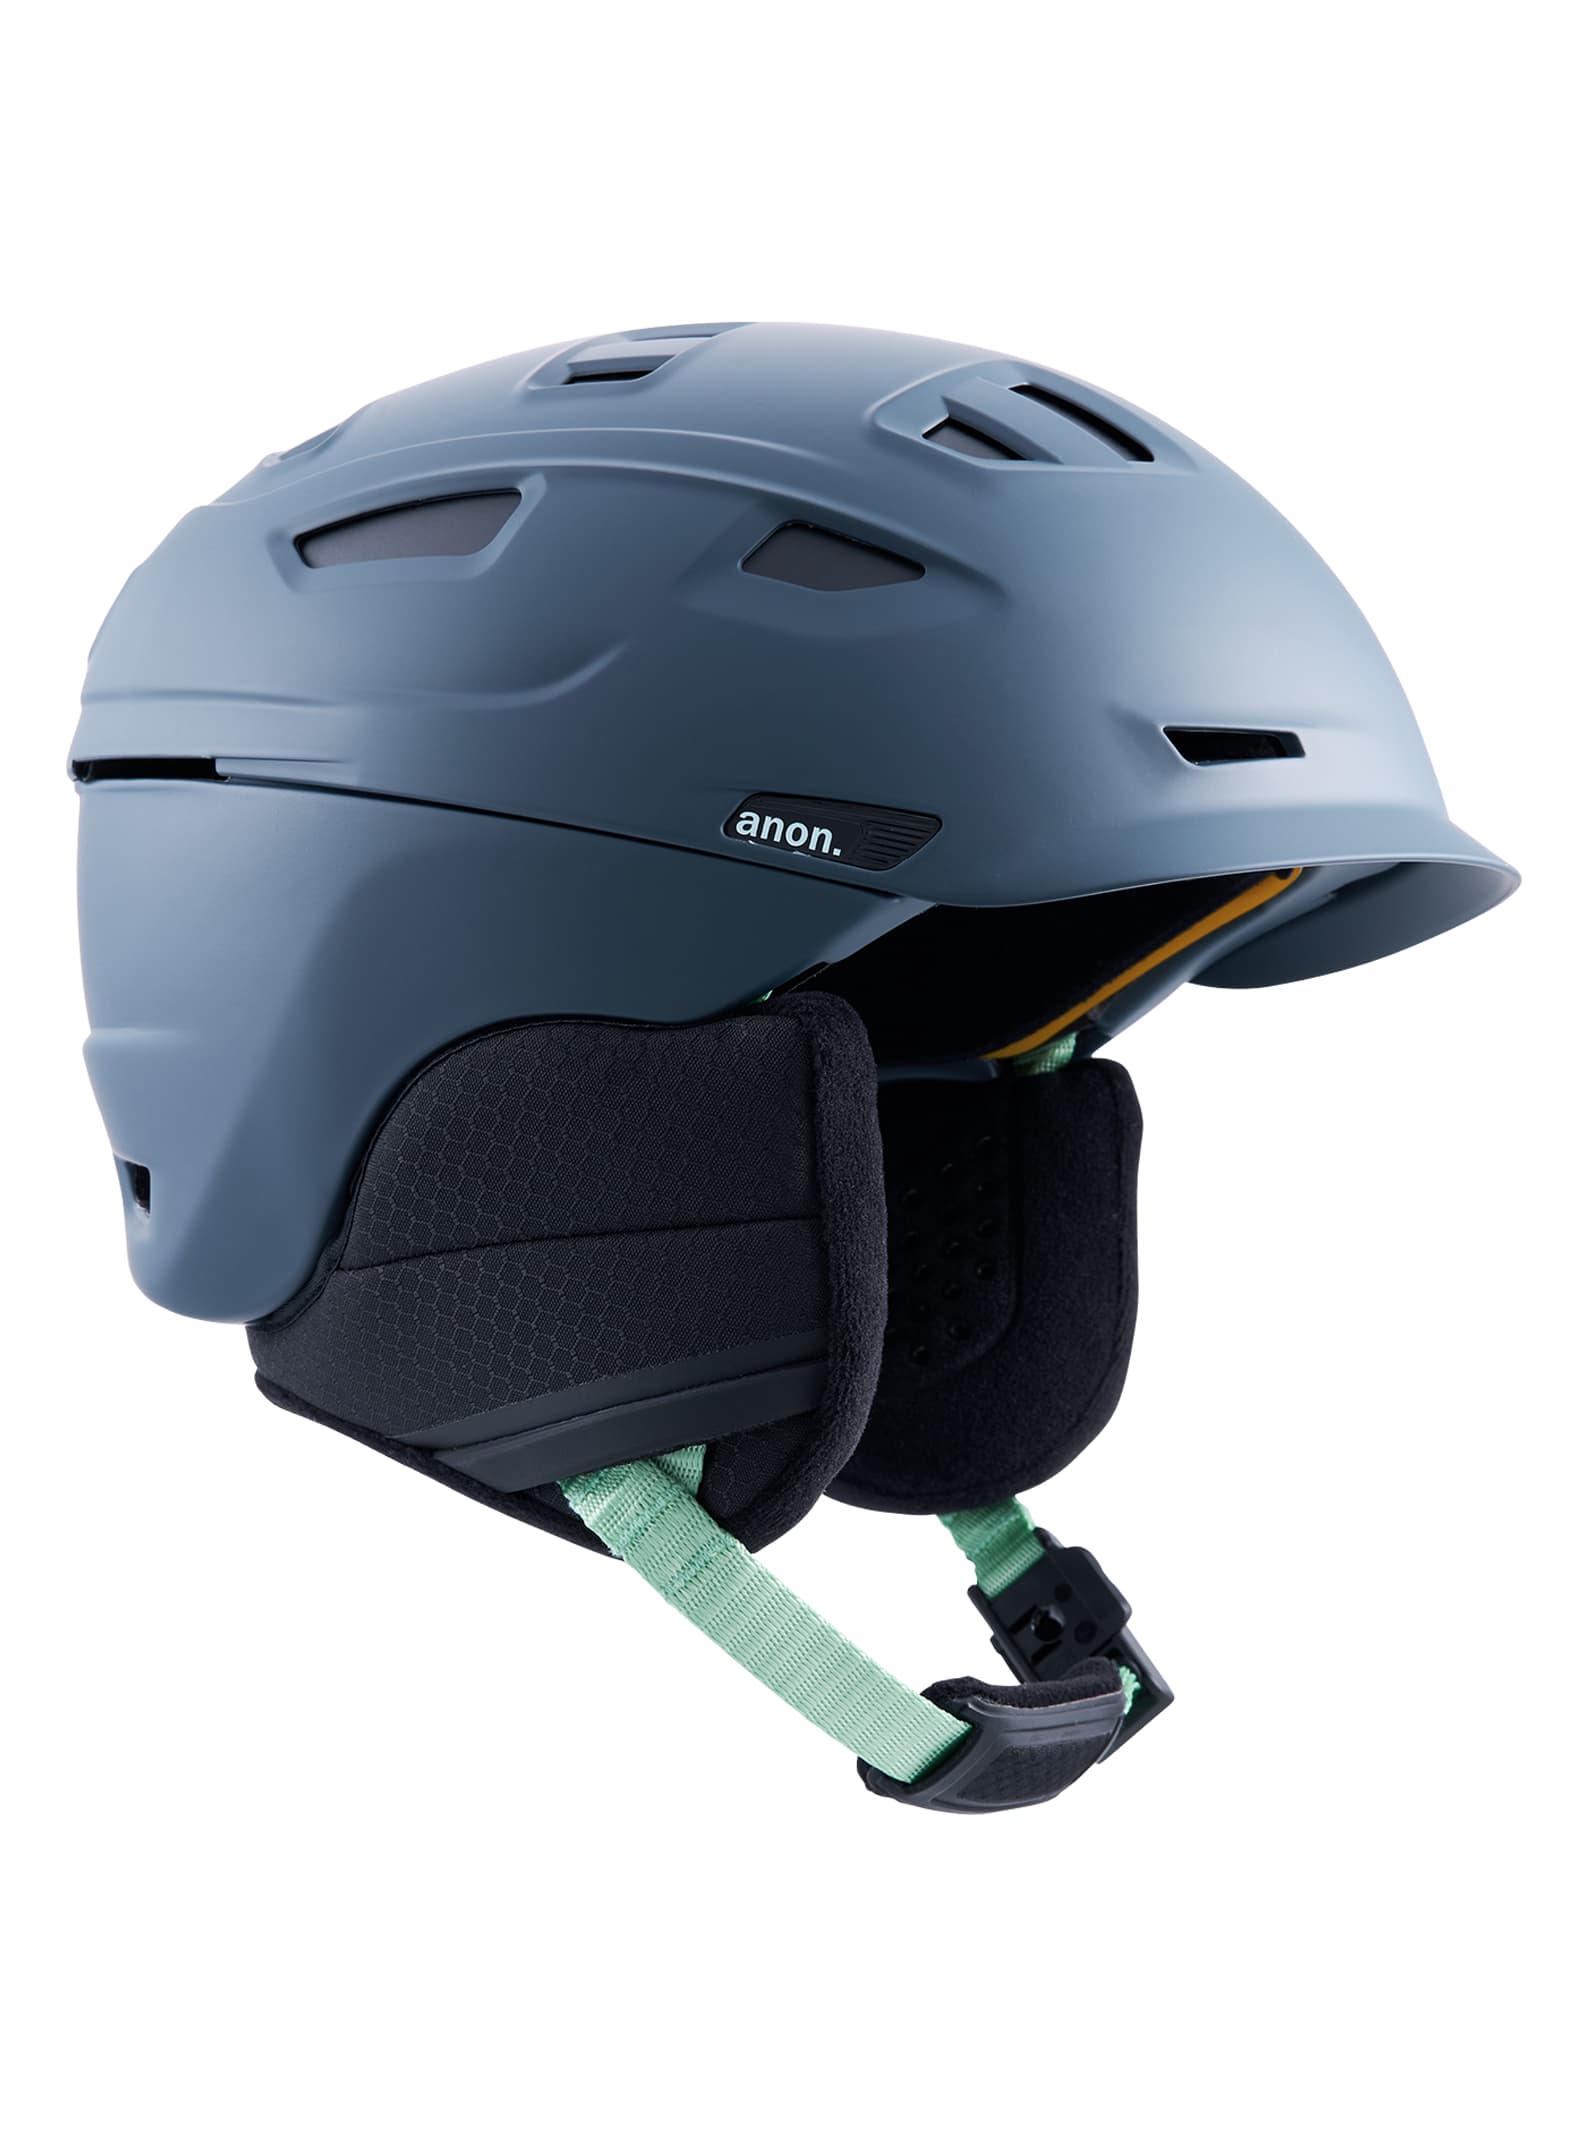 Anon Prime MIPS® Helmet - Sample | Burton.com Winter 2022 JP